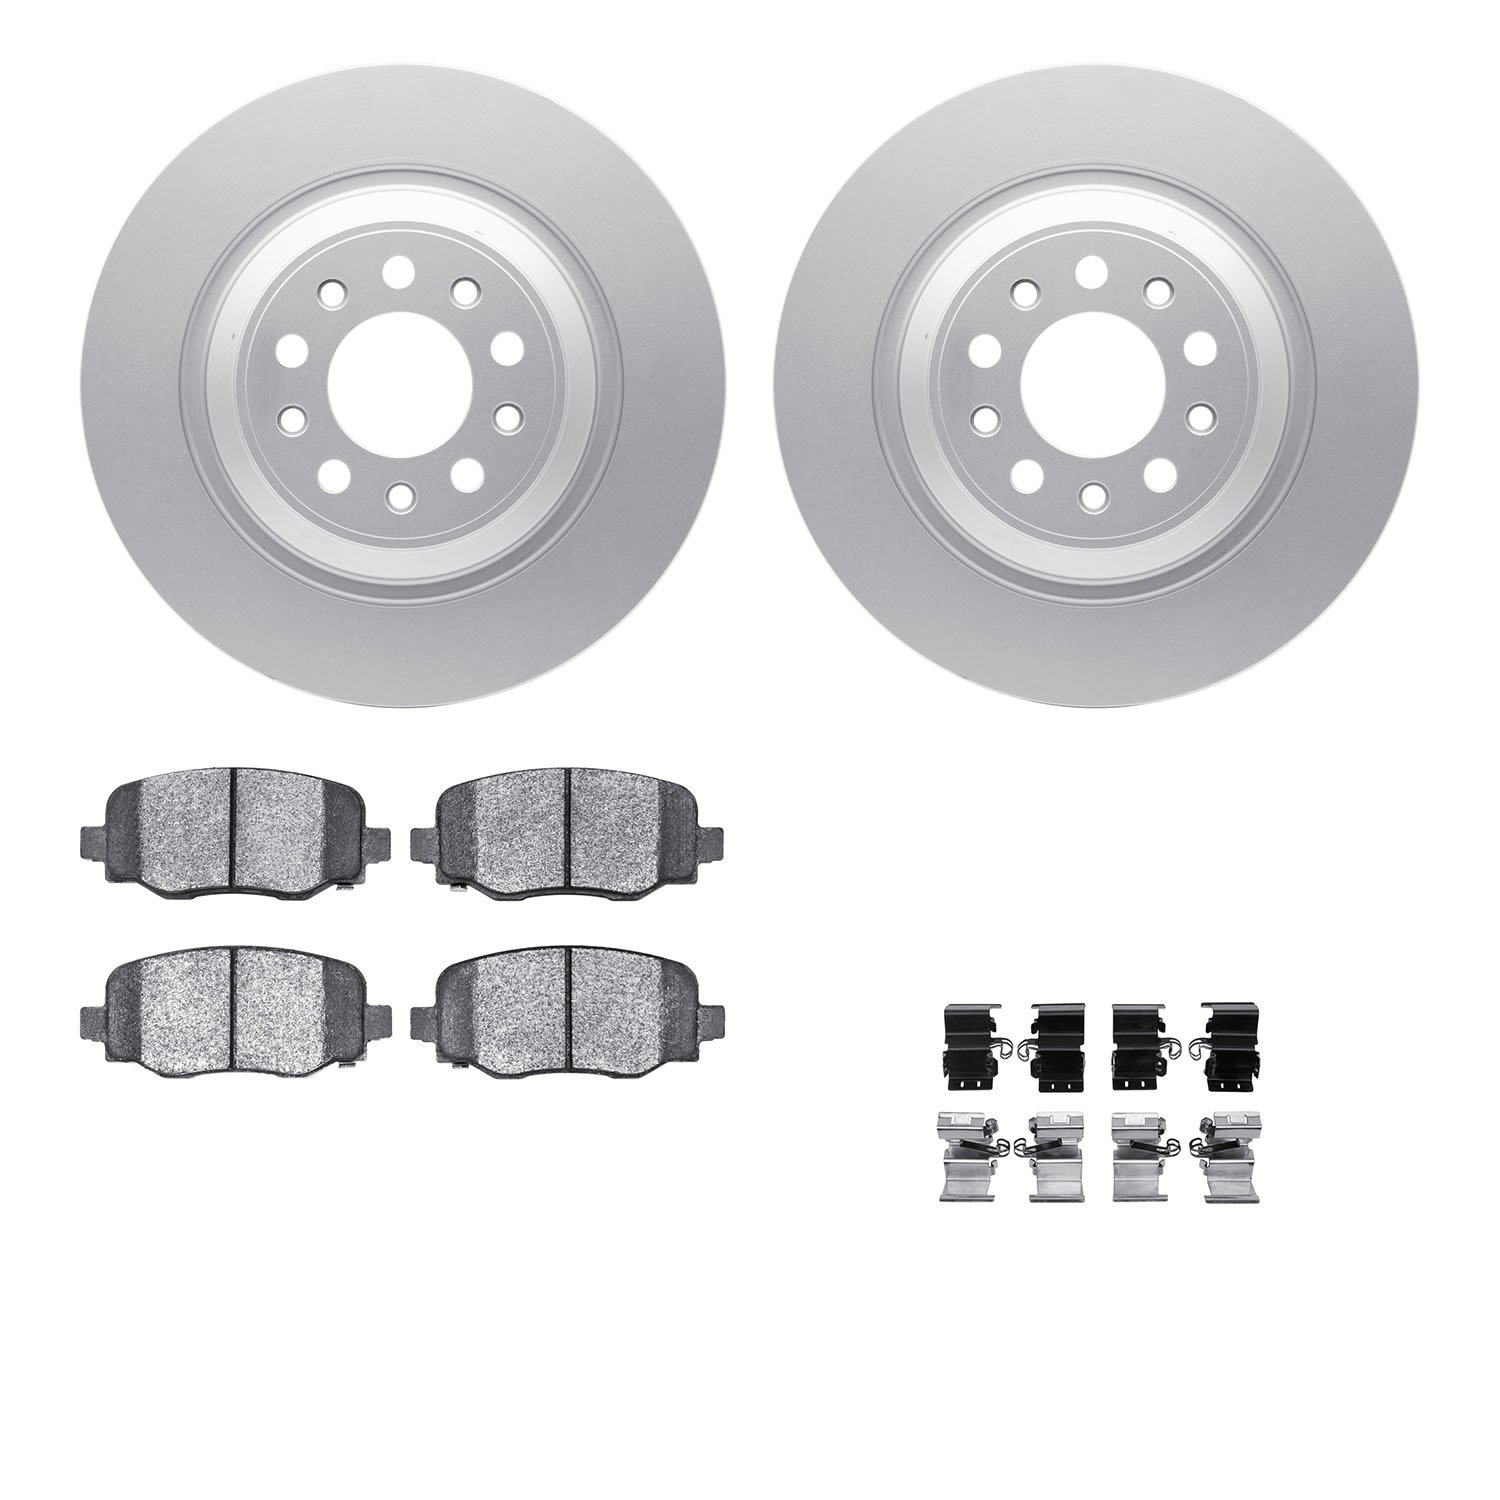 4412-42012 Geospec Brake Rotors with Ultimate-Duty Brake Pads & Hardware, Fits Select Mopar, Position: Rear